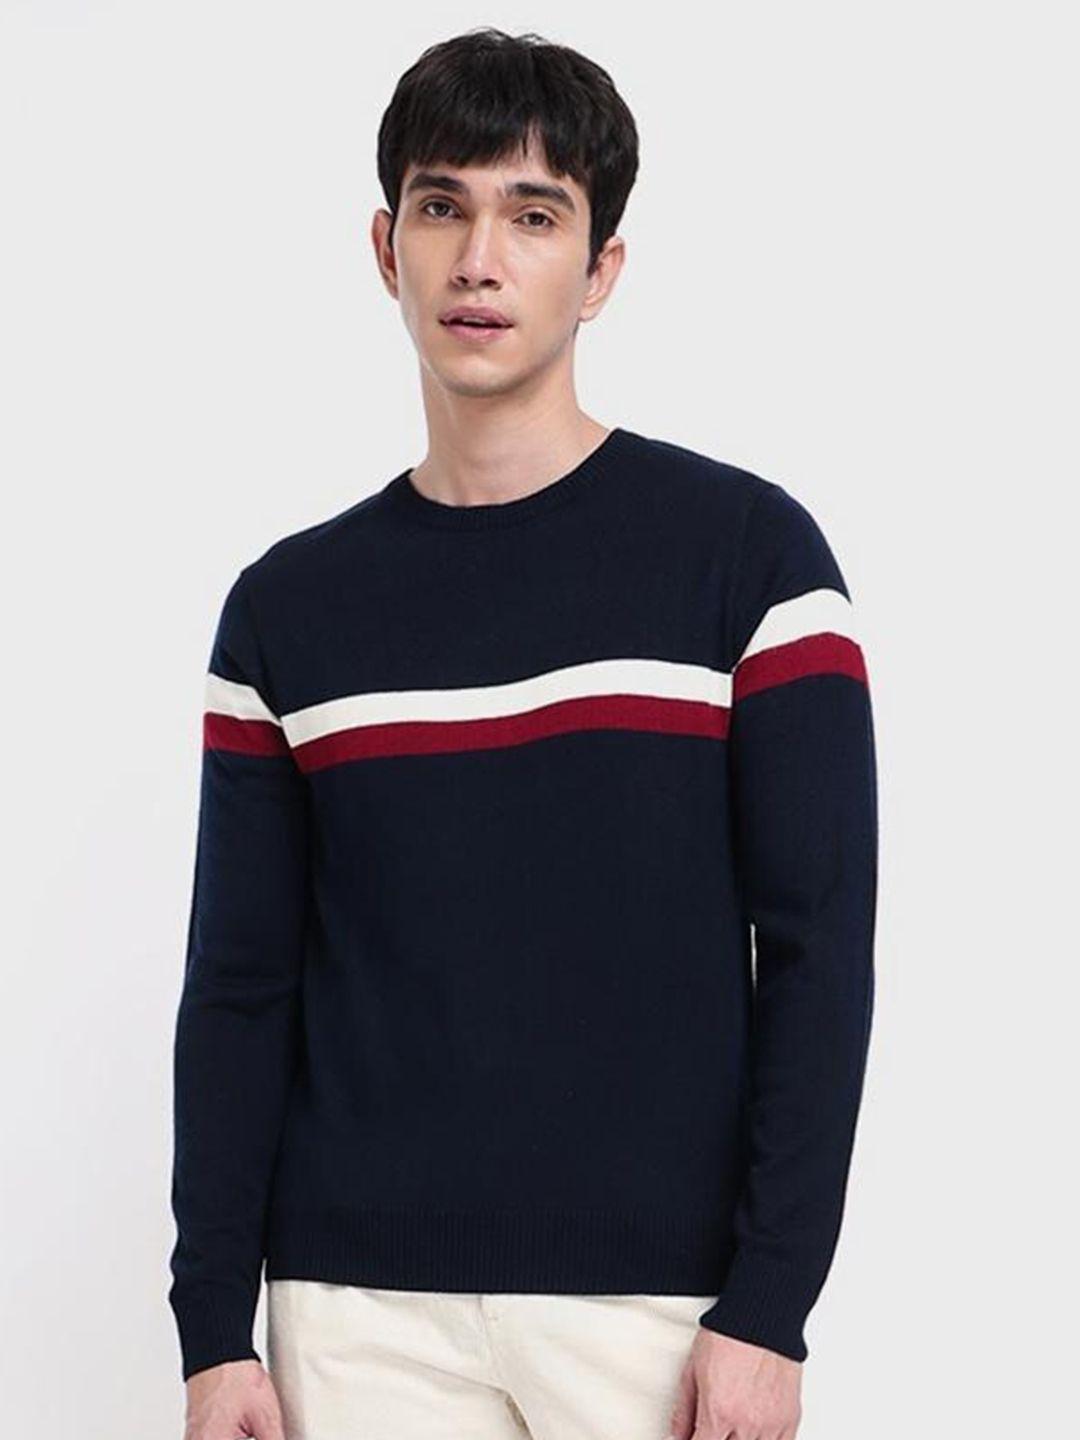 bewakoof-men-navy-blue-&-white-striped-acrylic-pullover-sweater